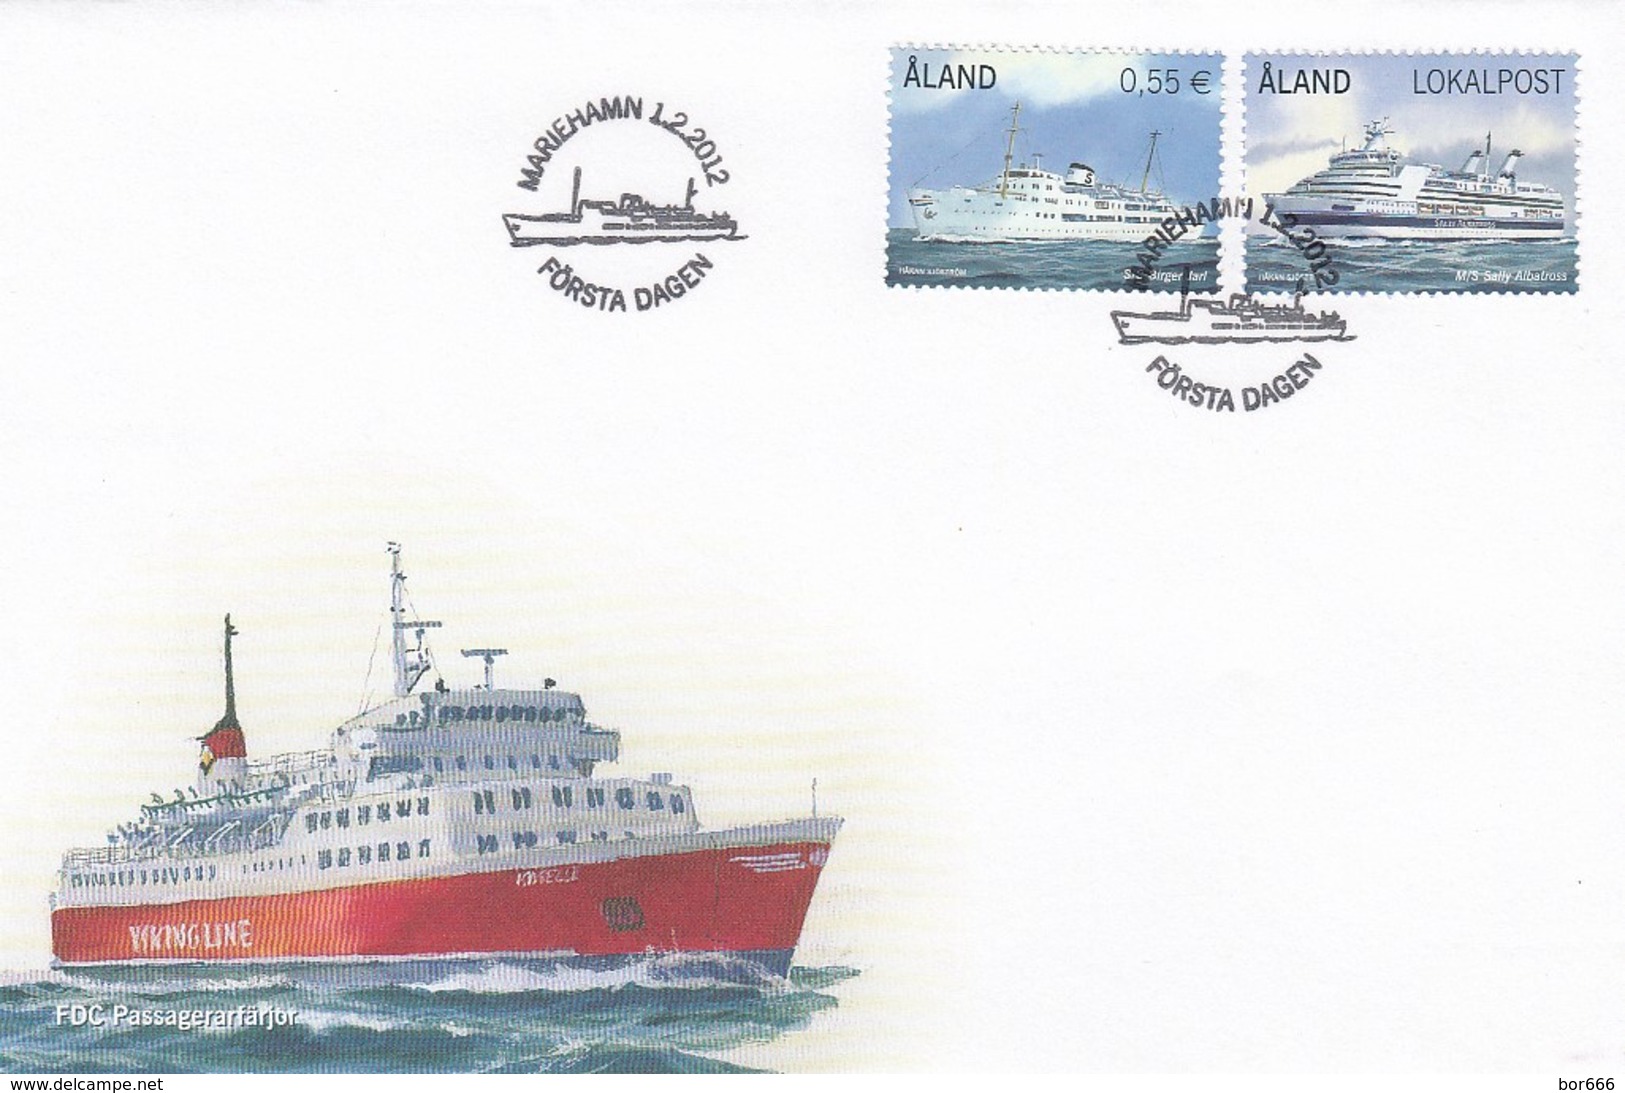 GOOD ALAND FDC 2012 - Ships - Aland